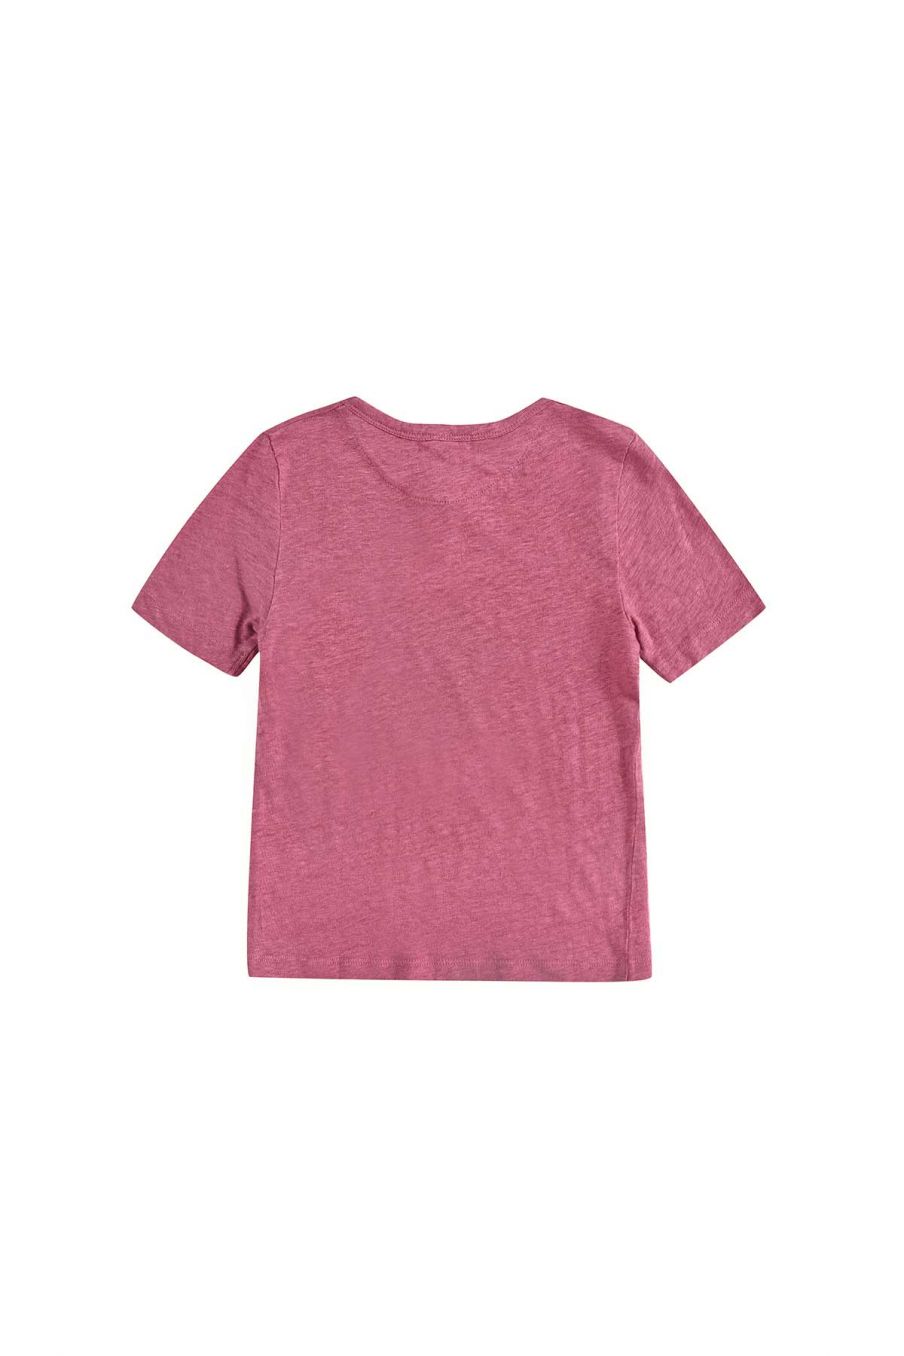 enfant-unisexe-t-shirt-tazo-raspberry